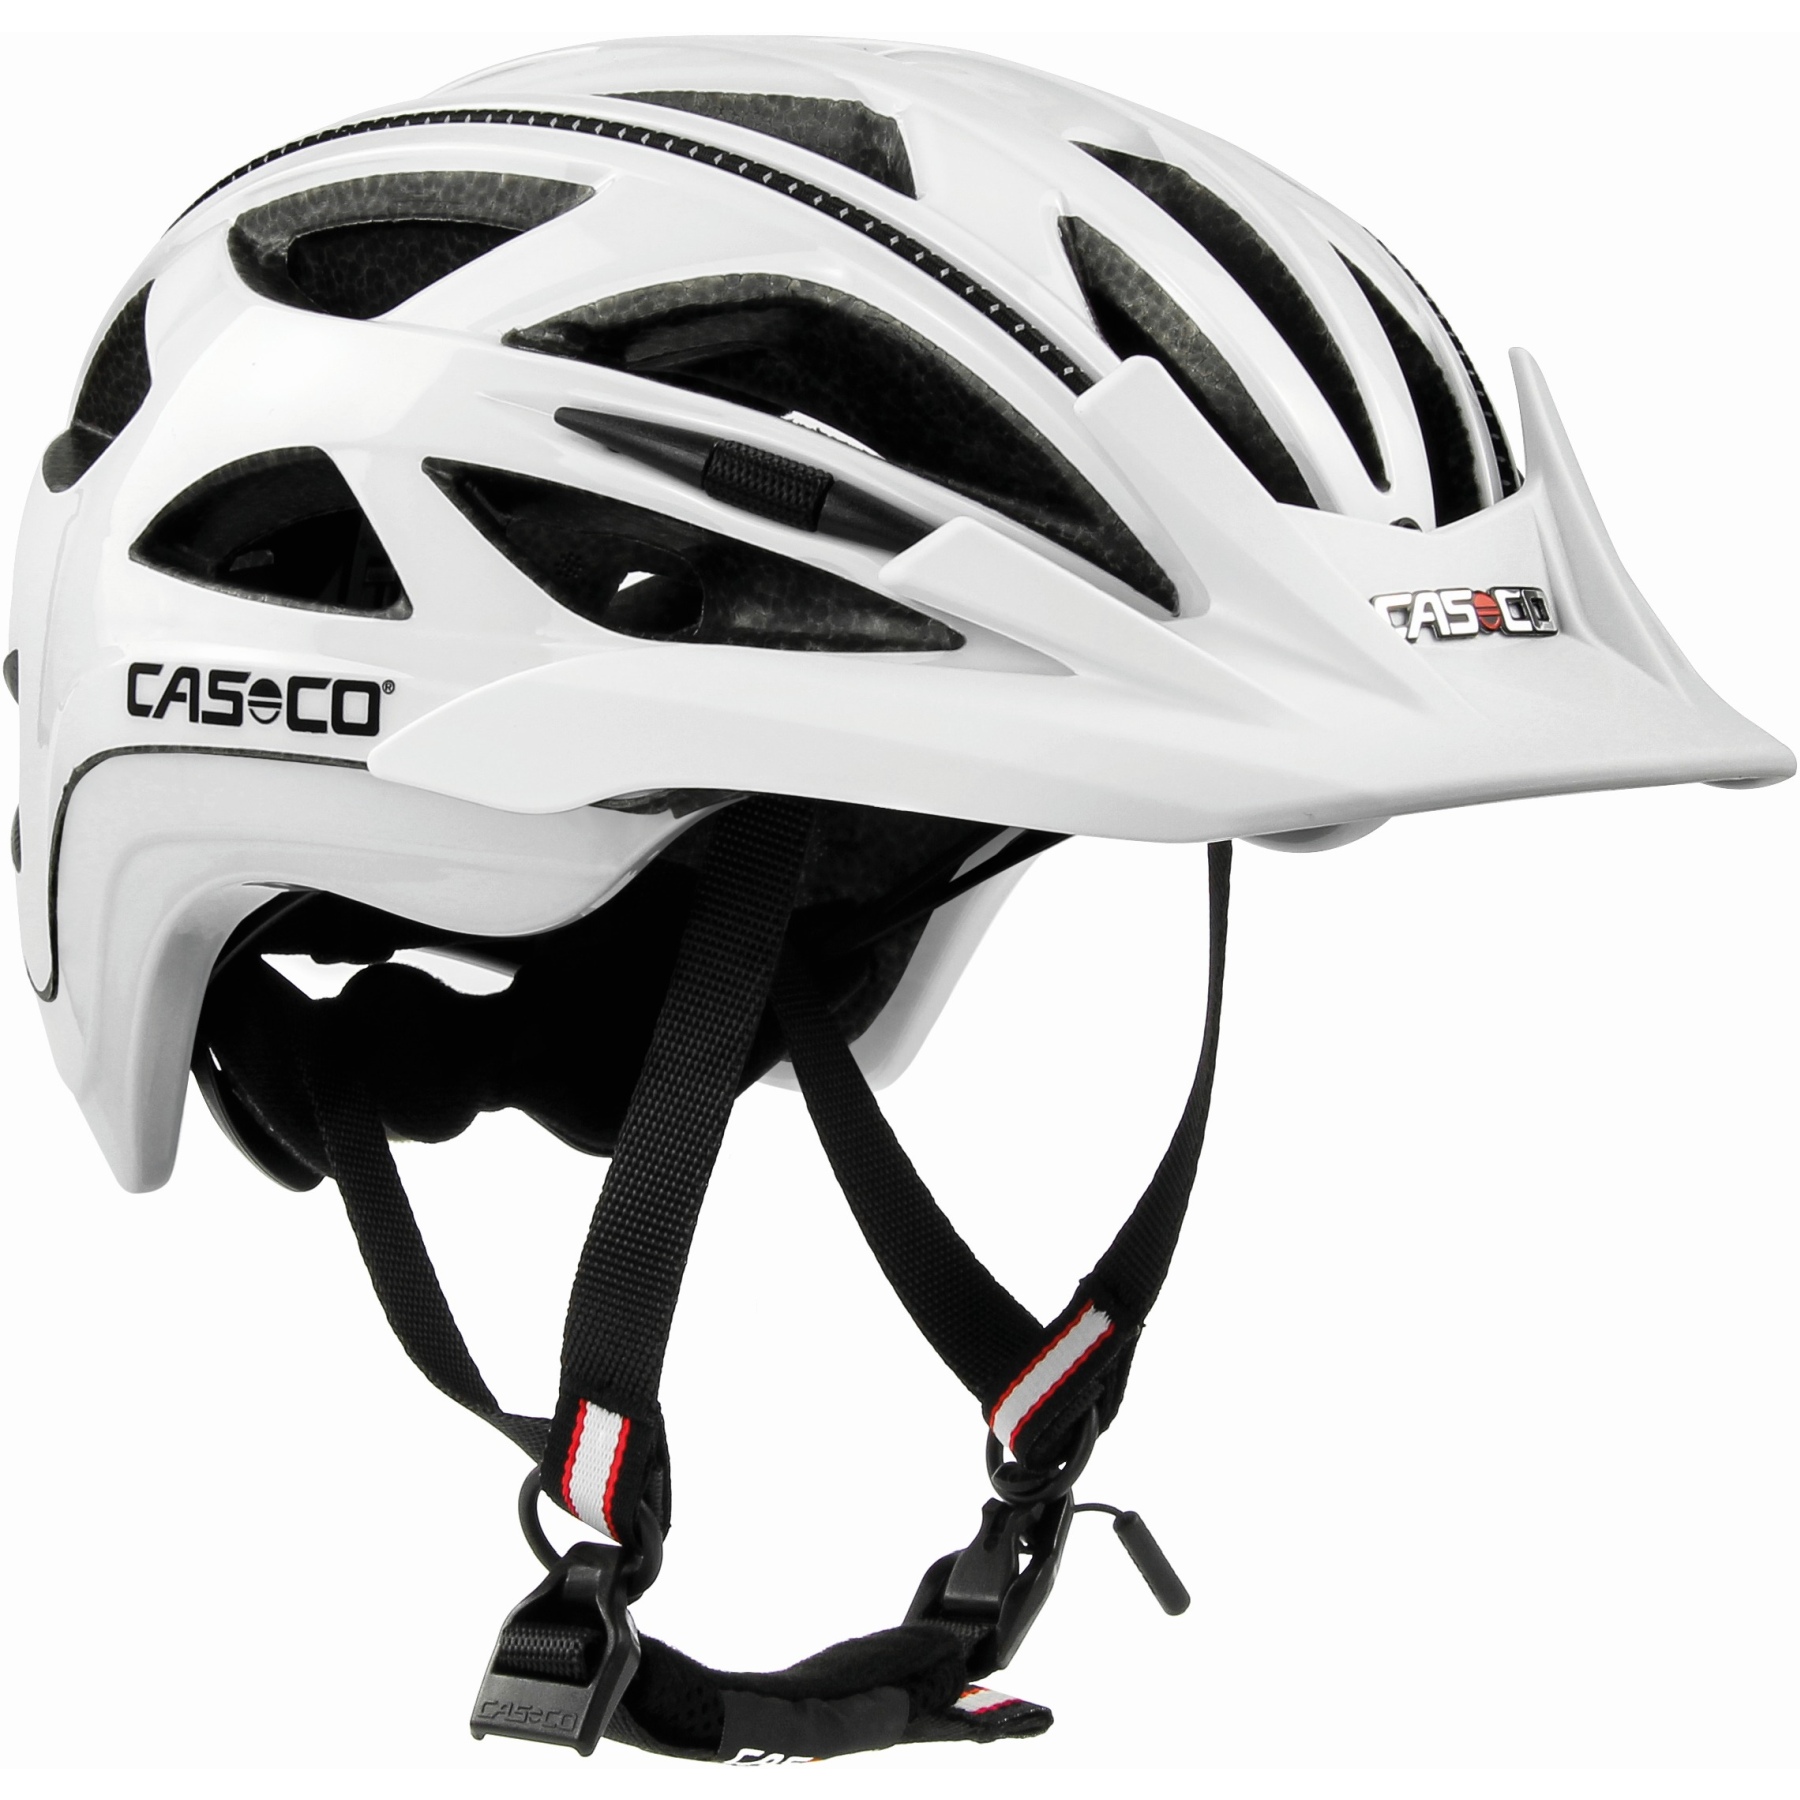 Picture of Casco Activ 2 Helmet - white shiny